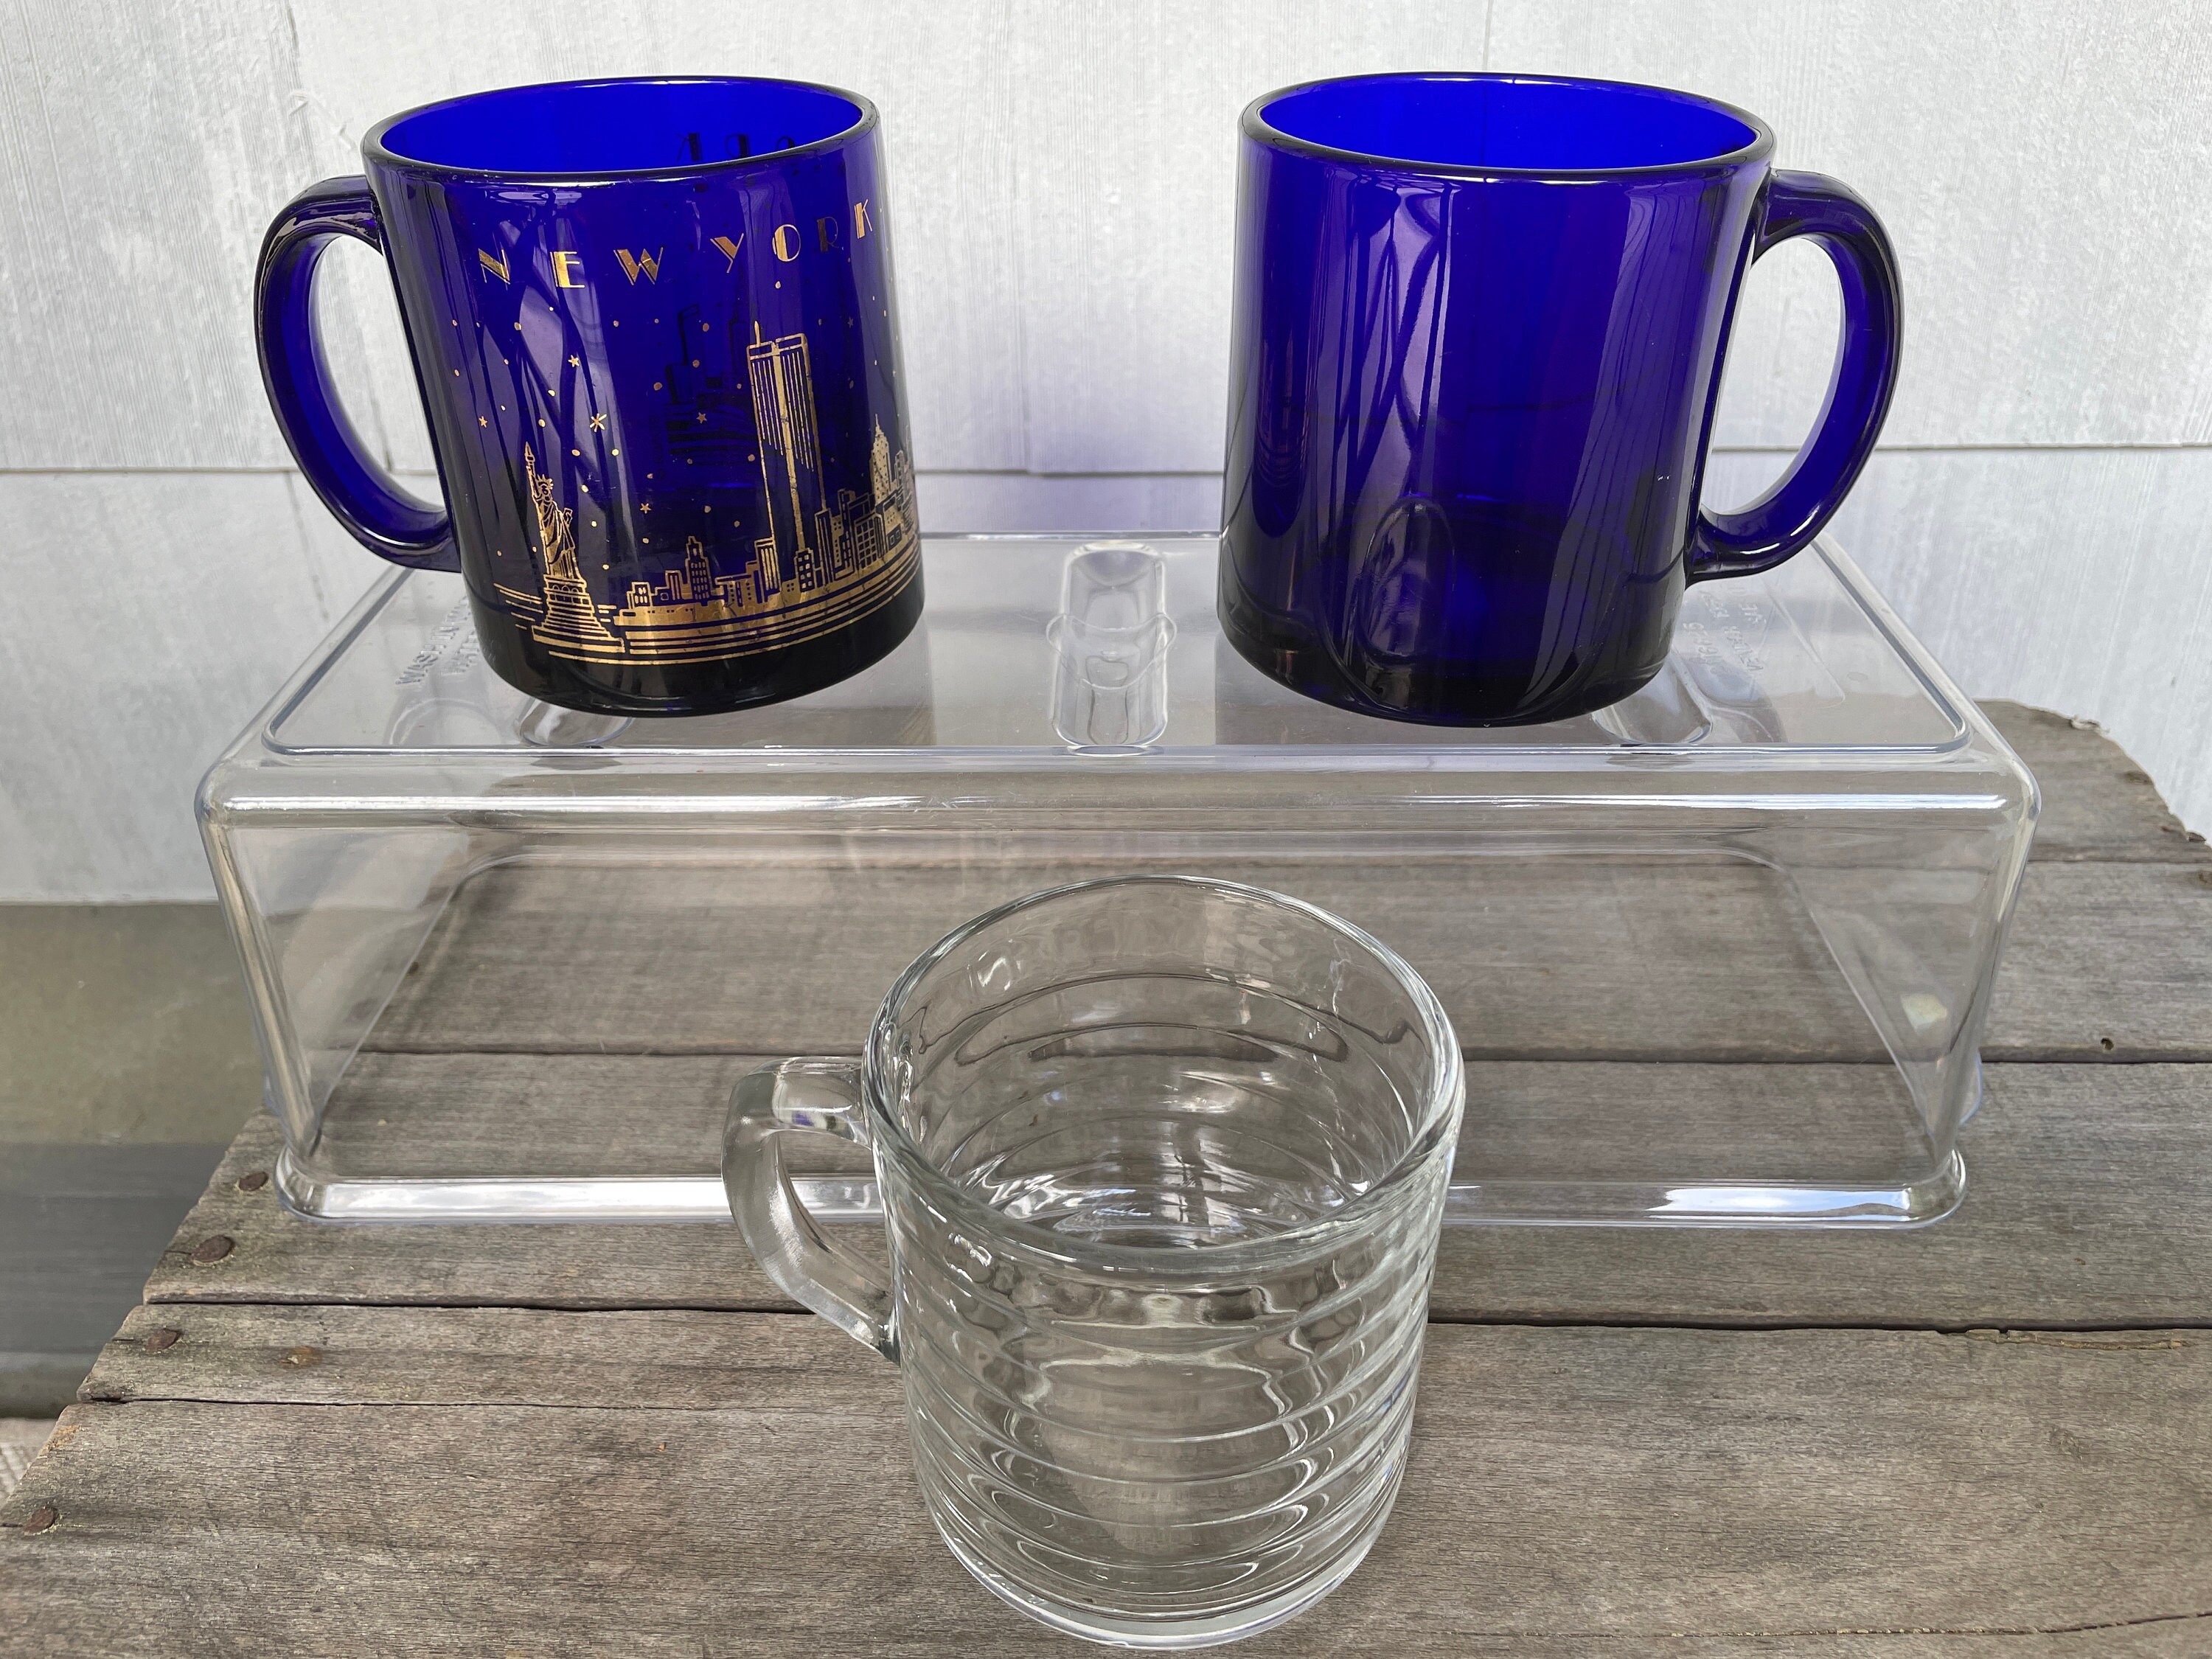 Elle Decor Set Of 2 Insulated Coffee Mug, 13-oz Double Wall Diamond Design  Glasses, Glass Coffee Mug For Lattes, Americano, Espresso, Clear : Target